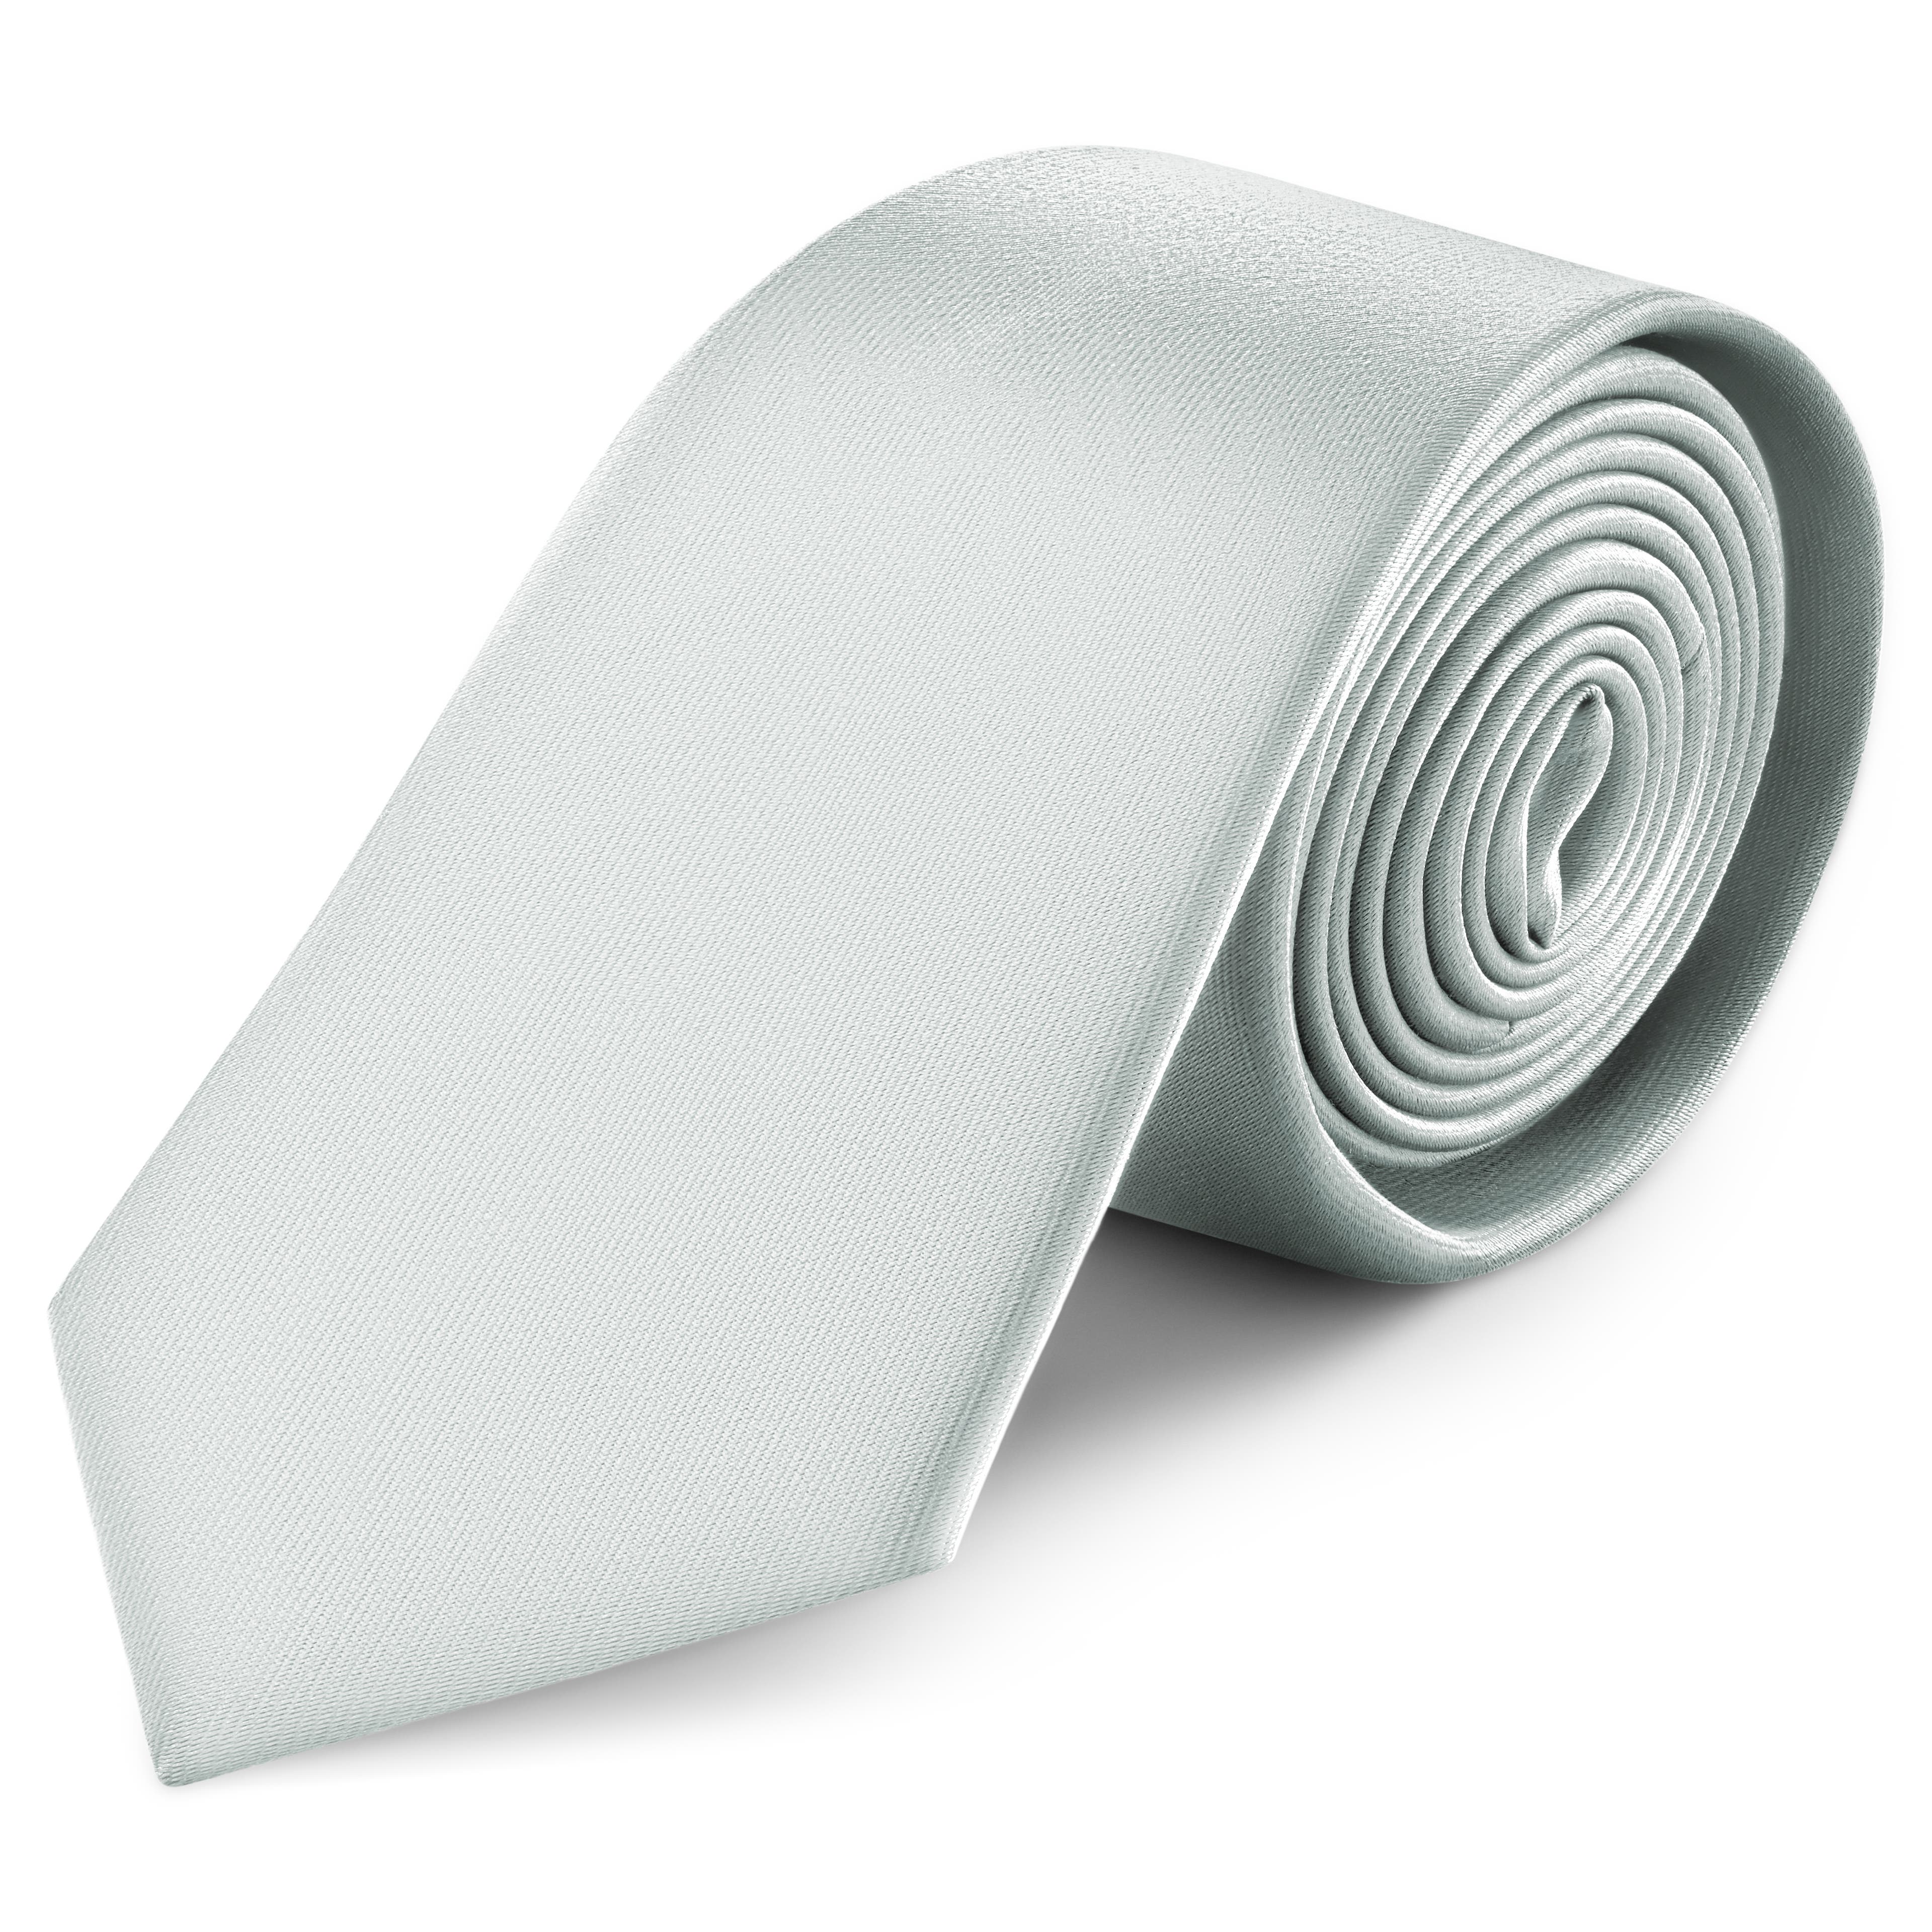 8 cm Silver-tone Satin Tie